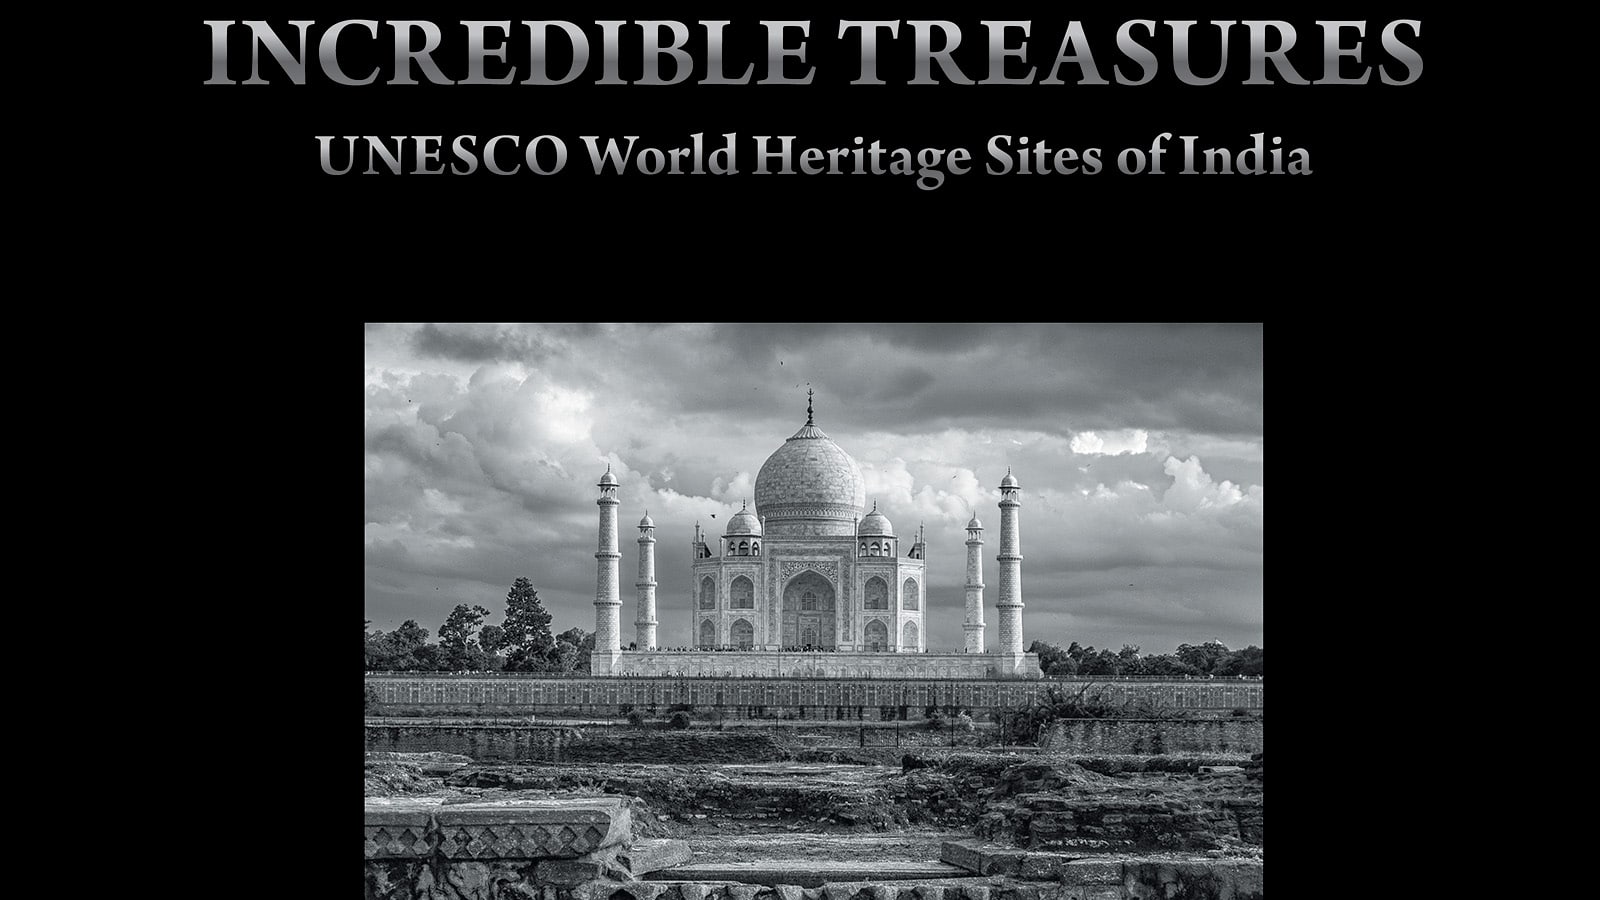 "IncredibleTreasures UNESCO TajMahal indiaartndesign"